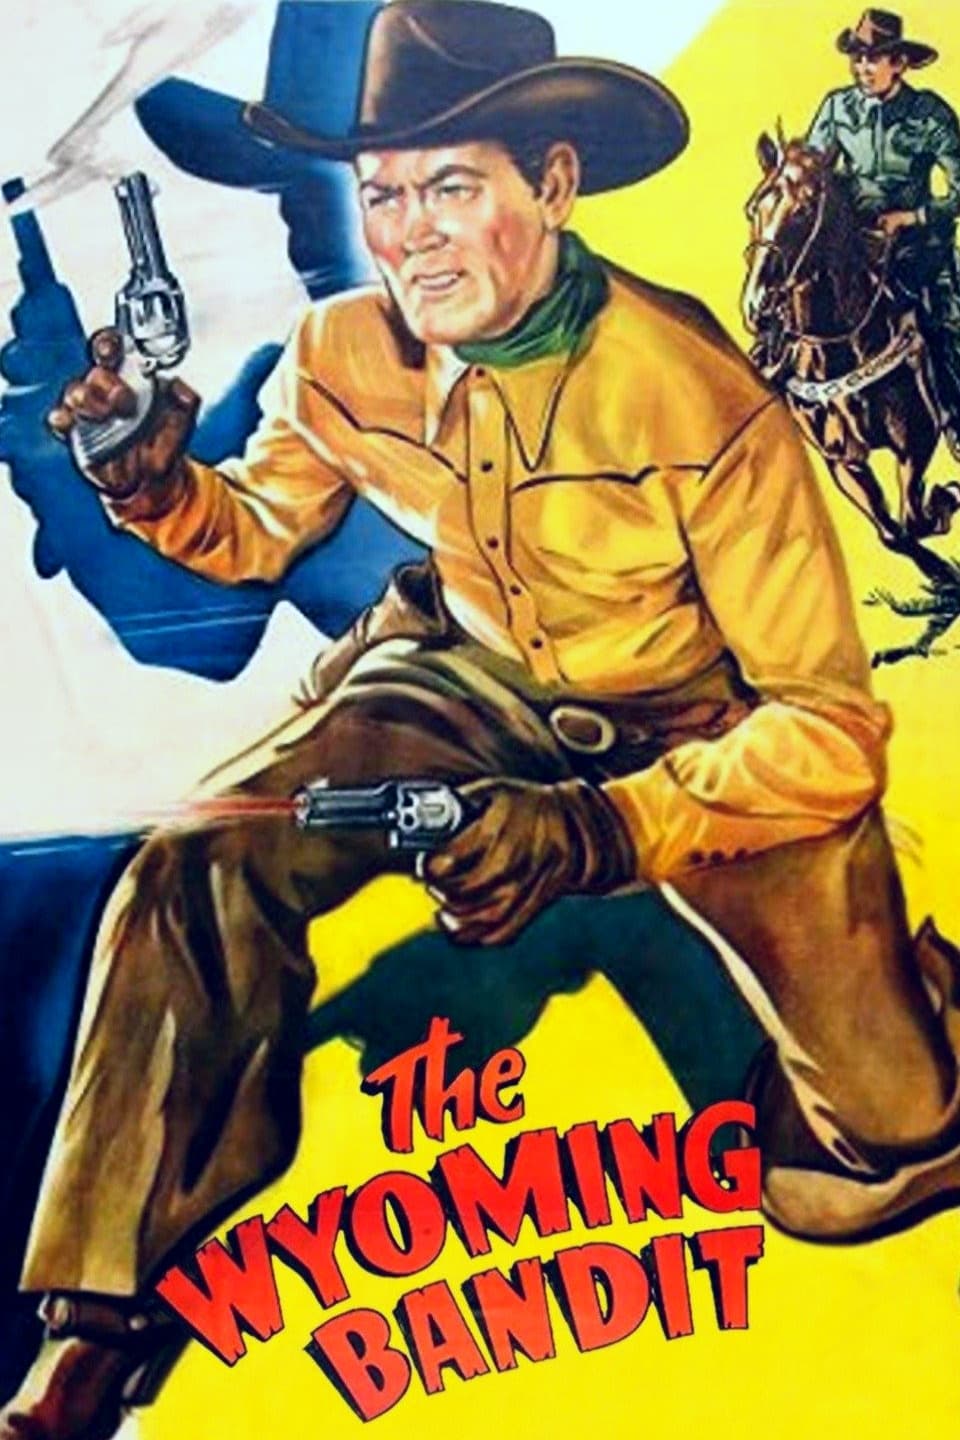 The Wyoming Bandit (1949)